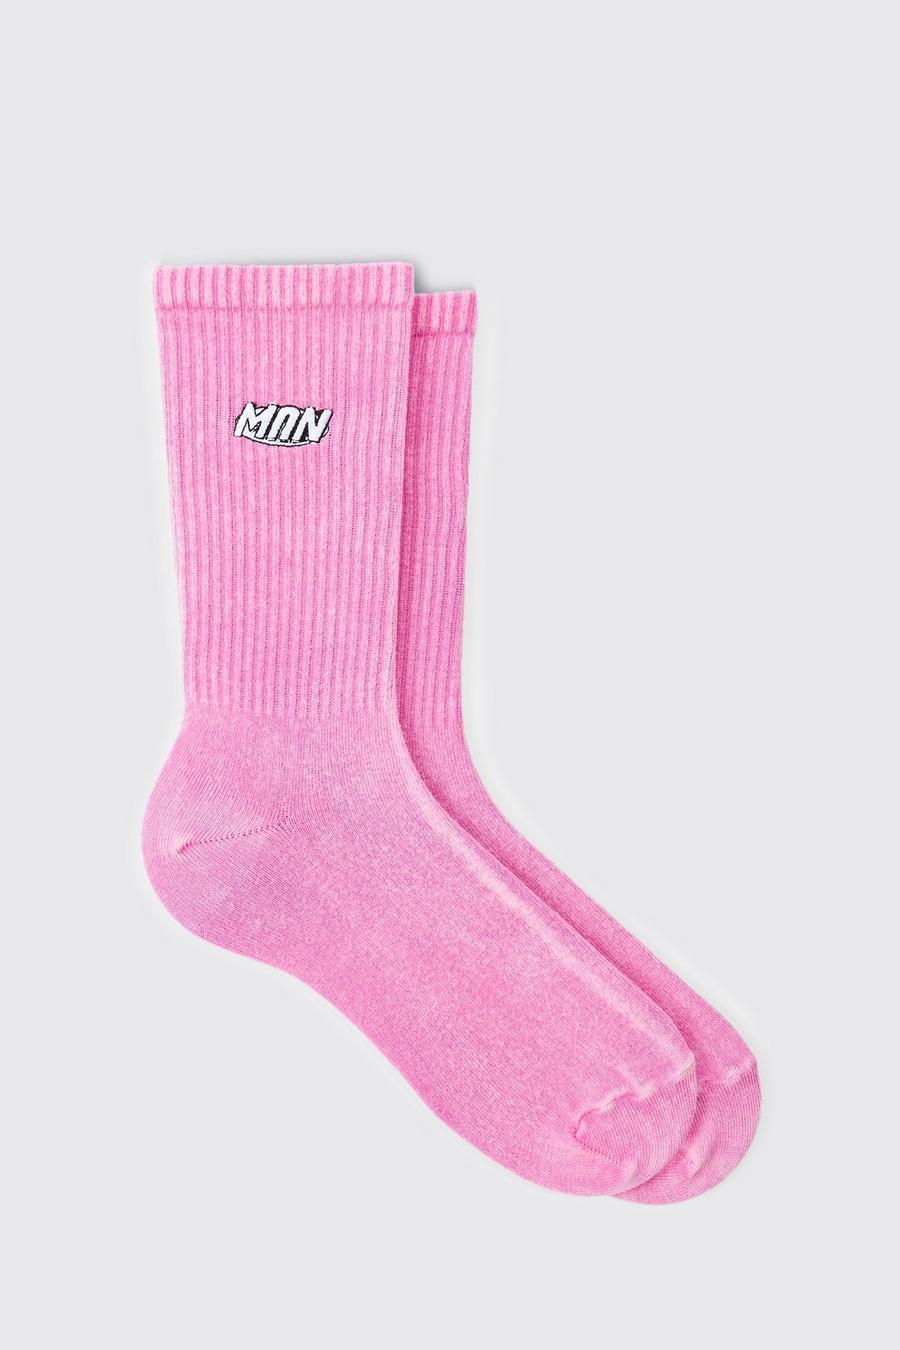 Pinke Man Socken mit Acid-Waschung, Pink